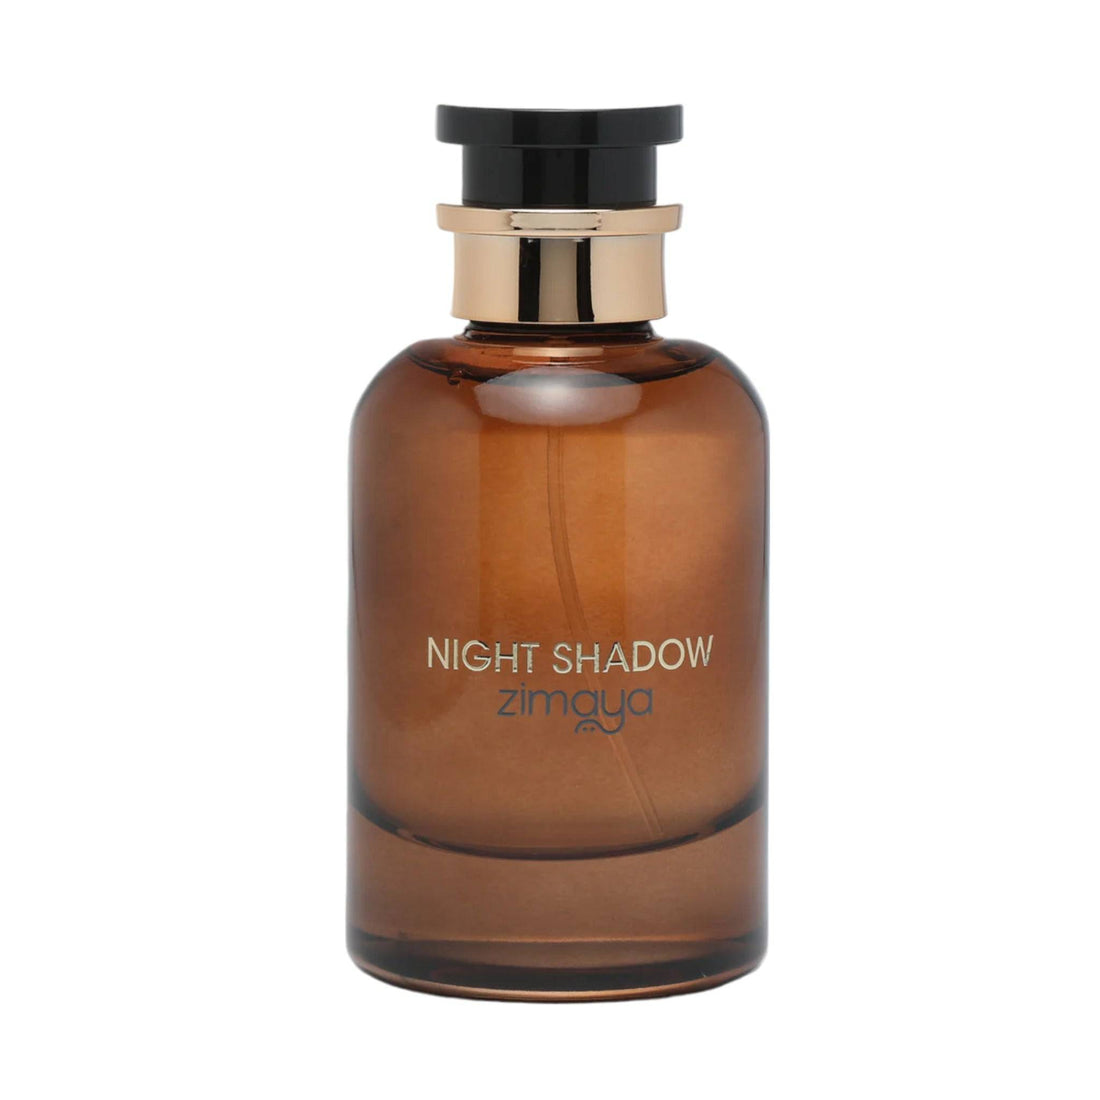 Mysterious 100ml bottle of Zimaya Night Shadow Eau De Parfum, representing its seductive and enigmatic scent profile.